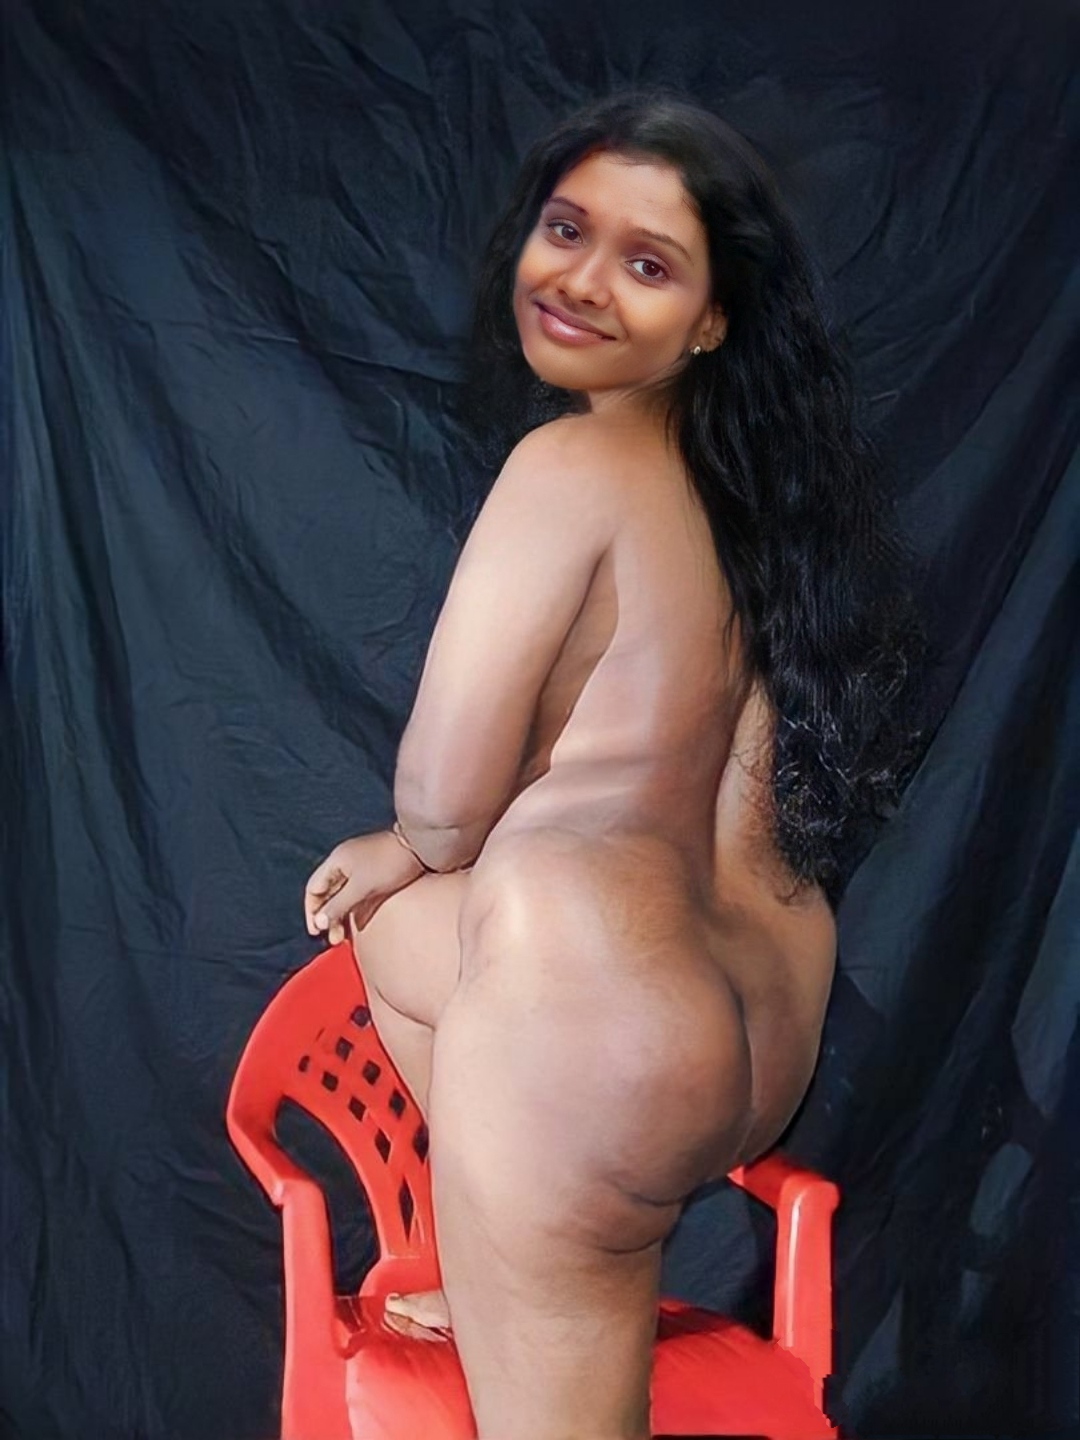 Sindhuja Tamil Prostitute Nude, Sindhuja Tamil Call Girl Nud